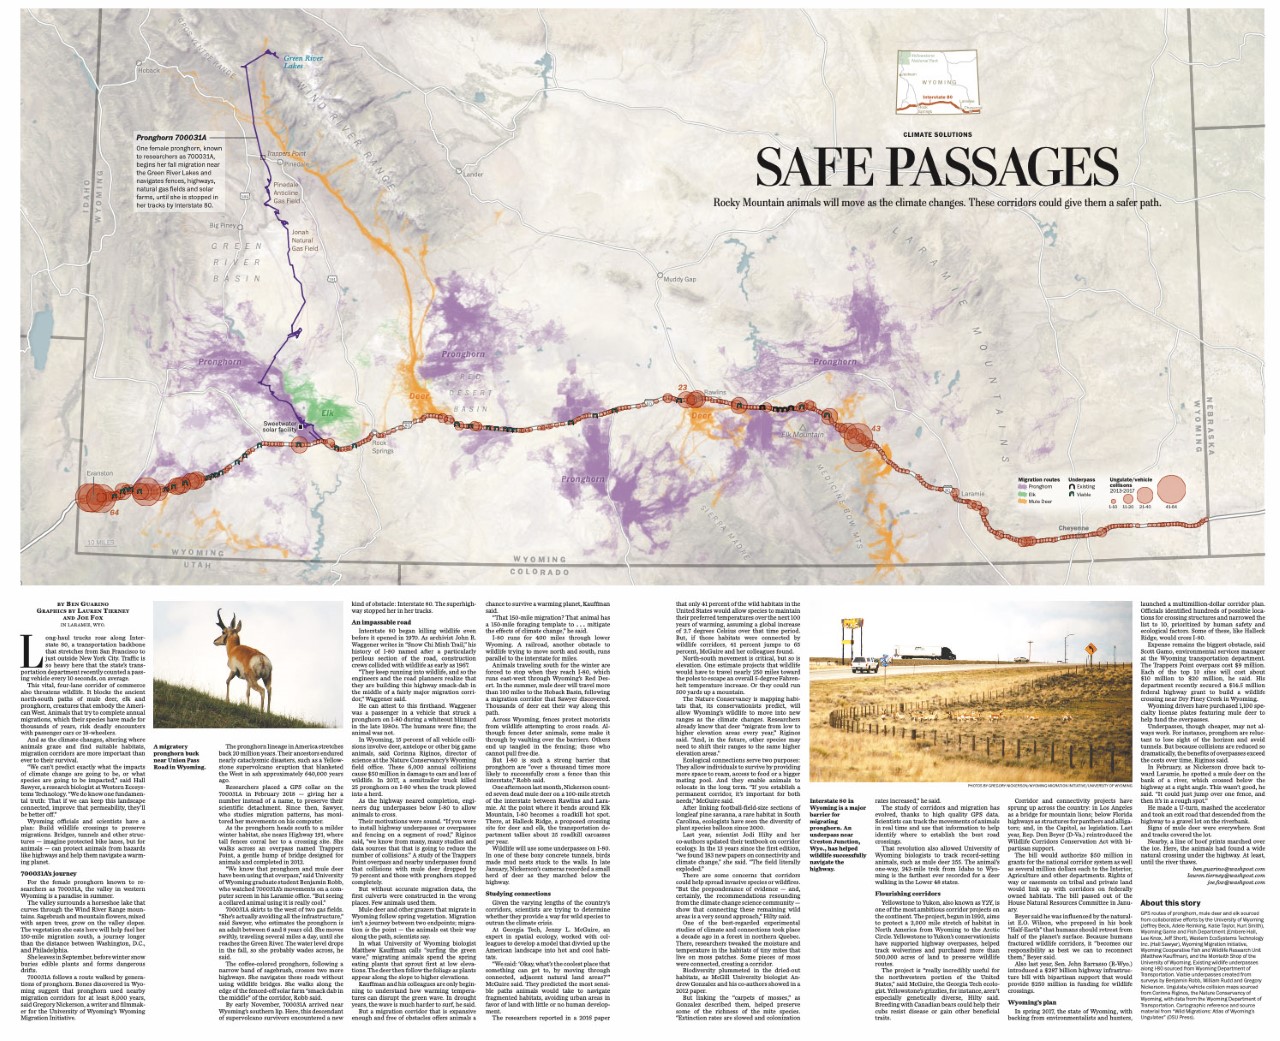 Washington Post article thumbnail with title "Safe Passages"